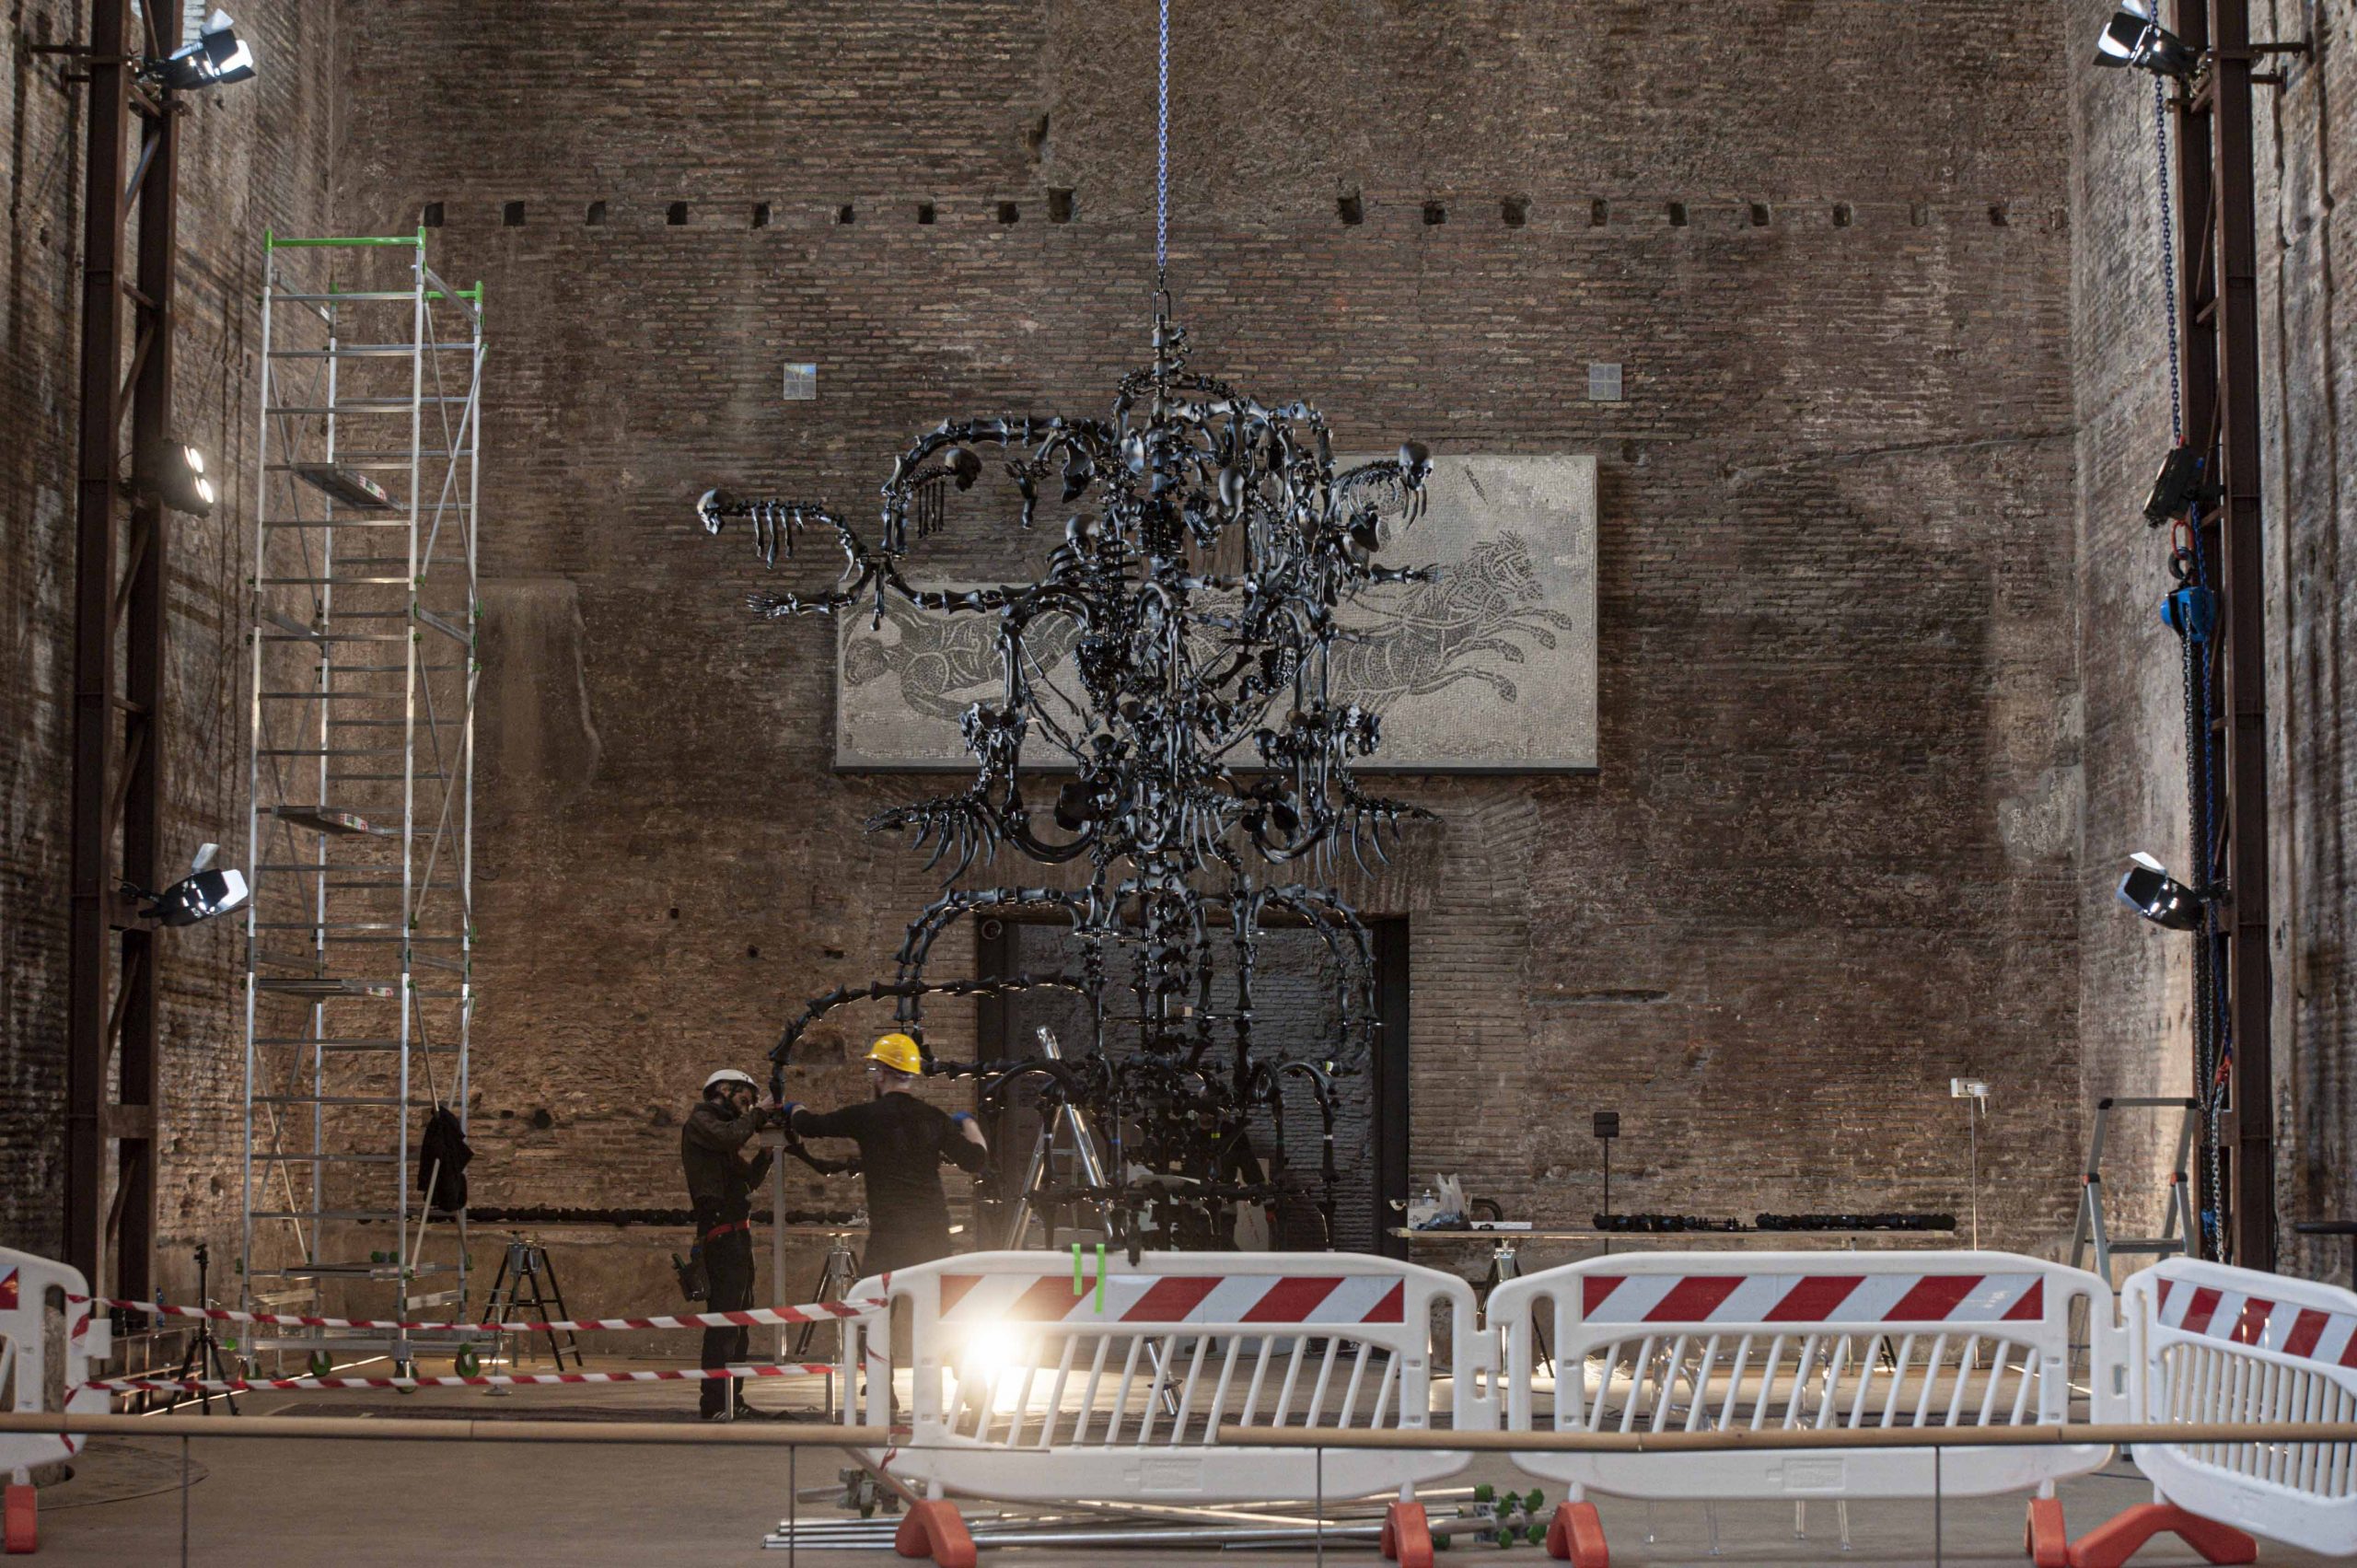 Installation of La Commedia Umana by Ai Weiwei, Terme di Diocleziano, Rome